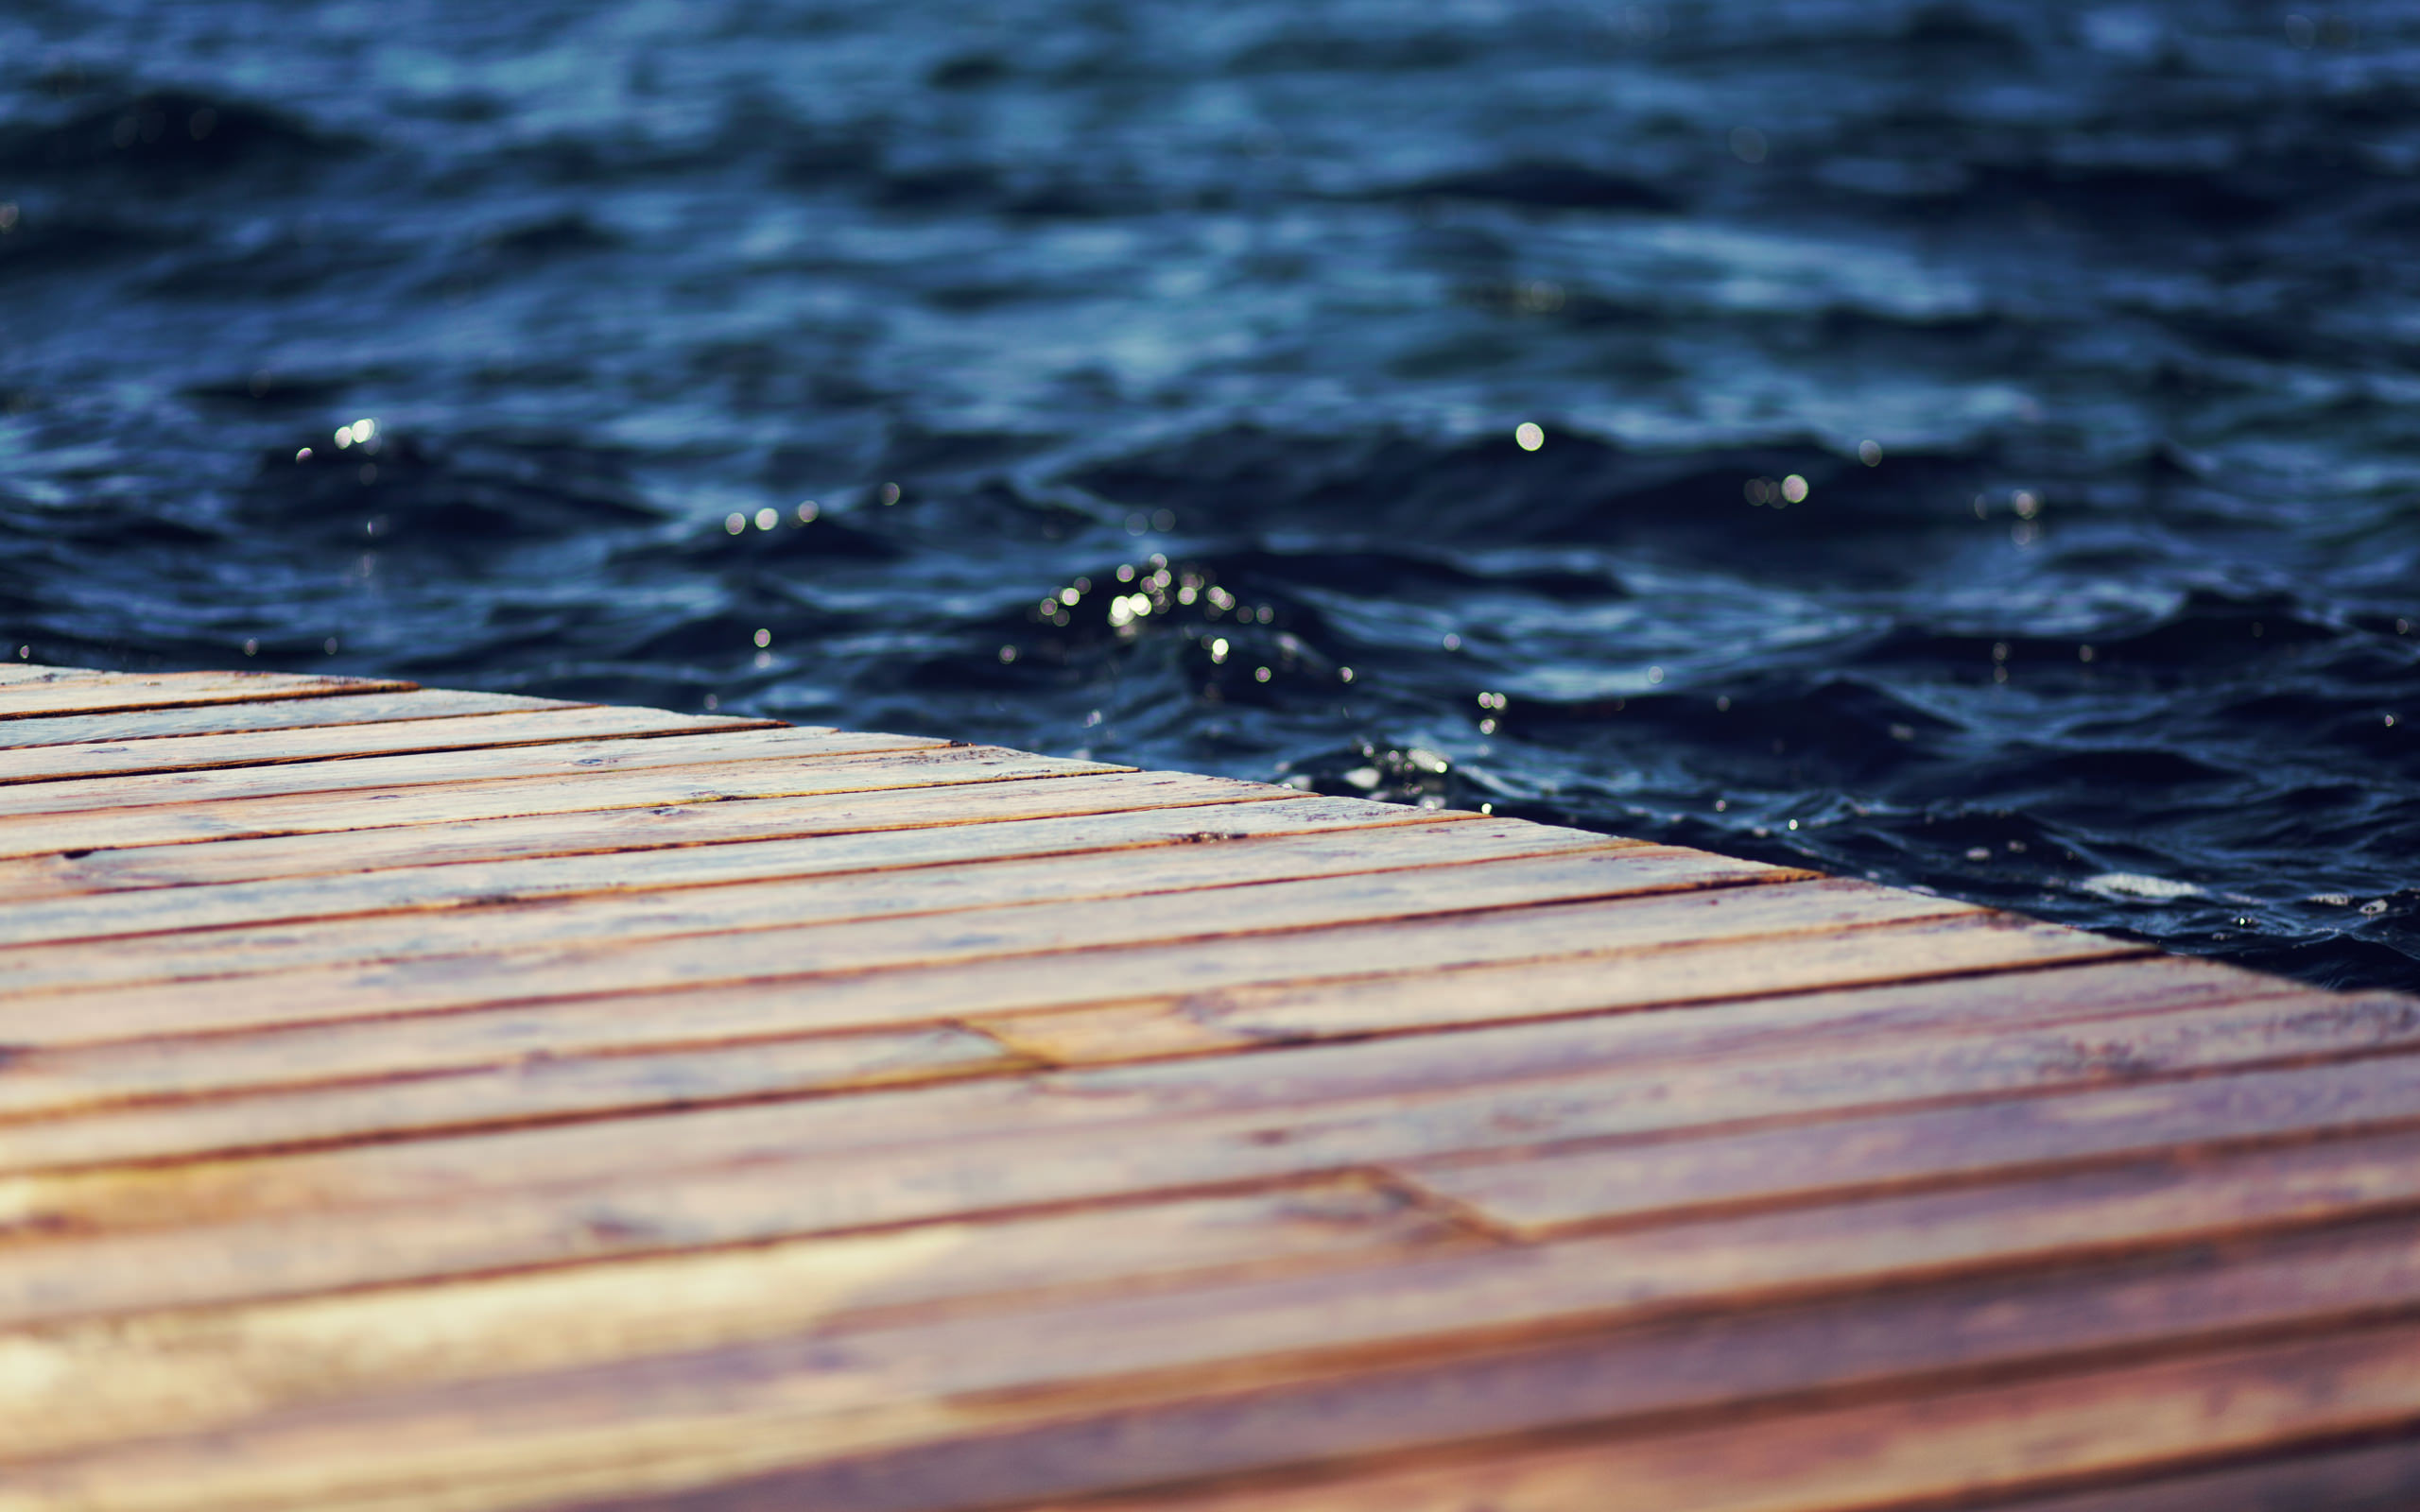 General 2560x1600 nature landscape water wooden surface pier waves wood closeup